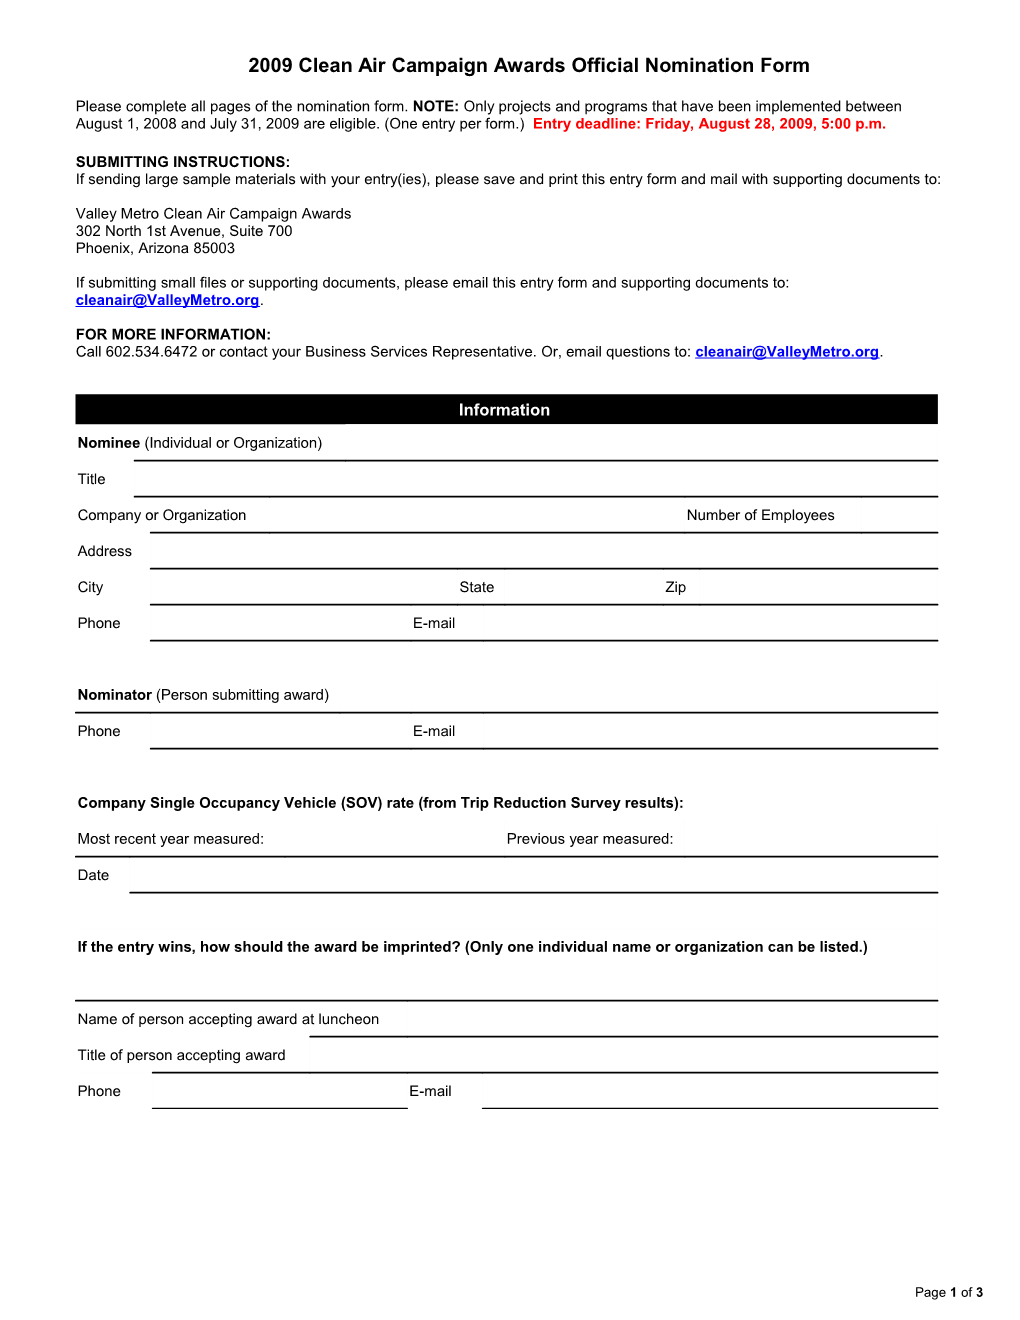 2009 CAC Nomination Form